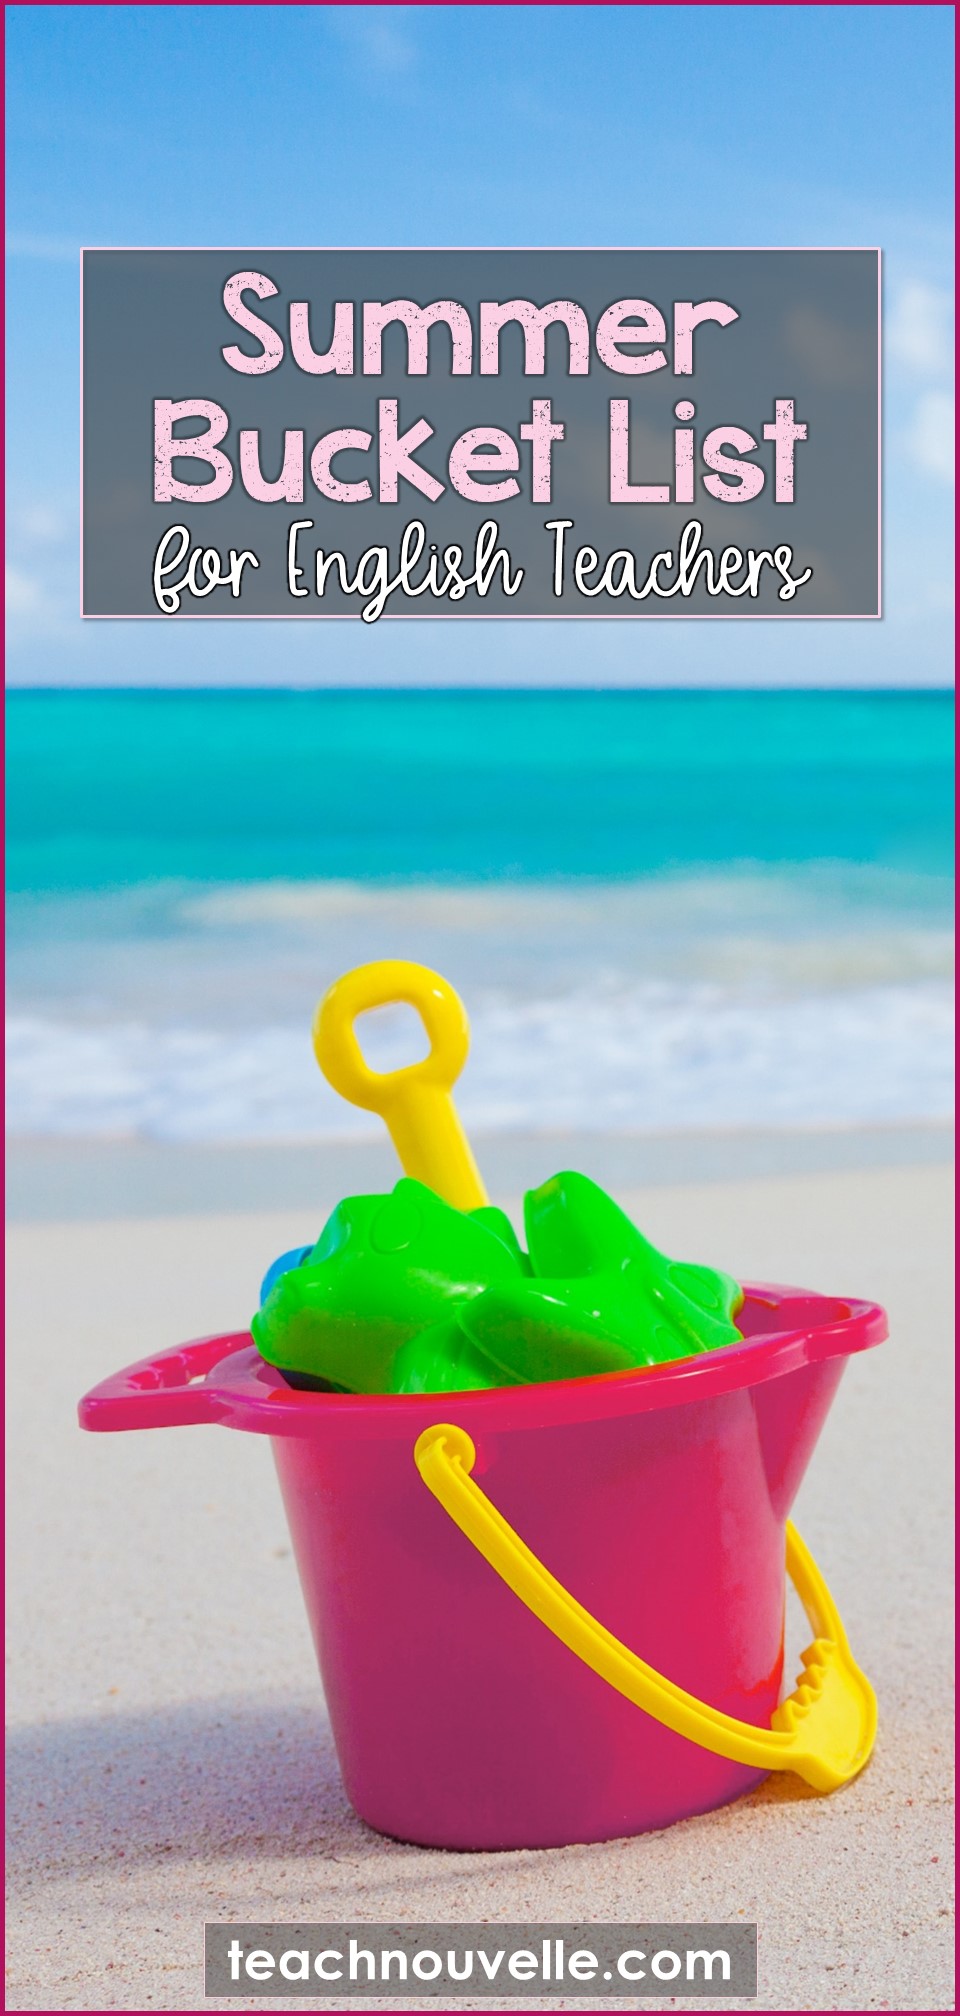 Summer Bucket List for English Teachers